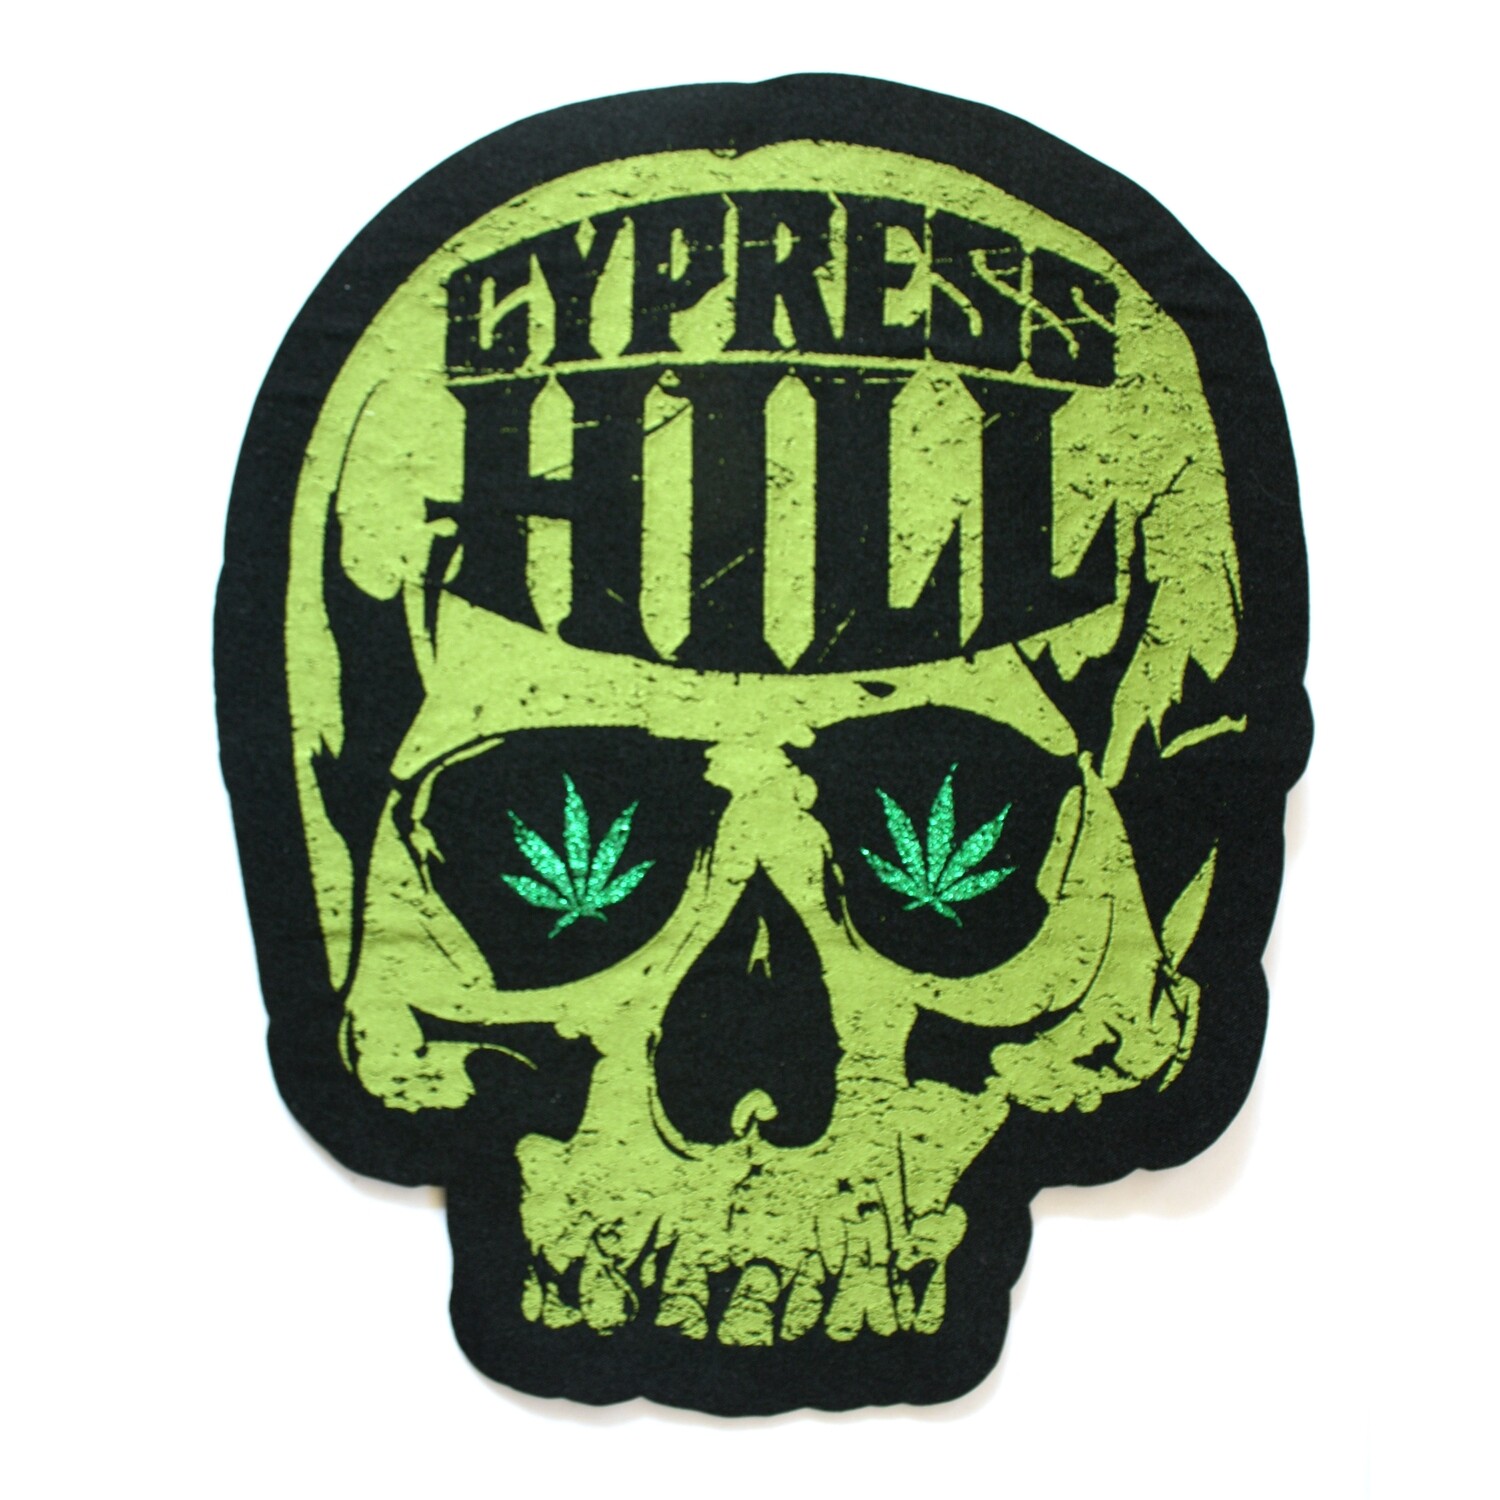 Cypress Hill - How I Could Just Kill a Man